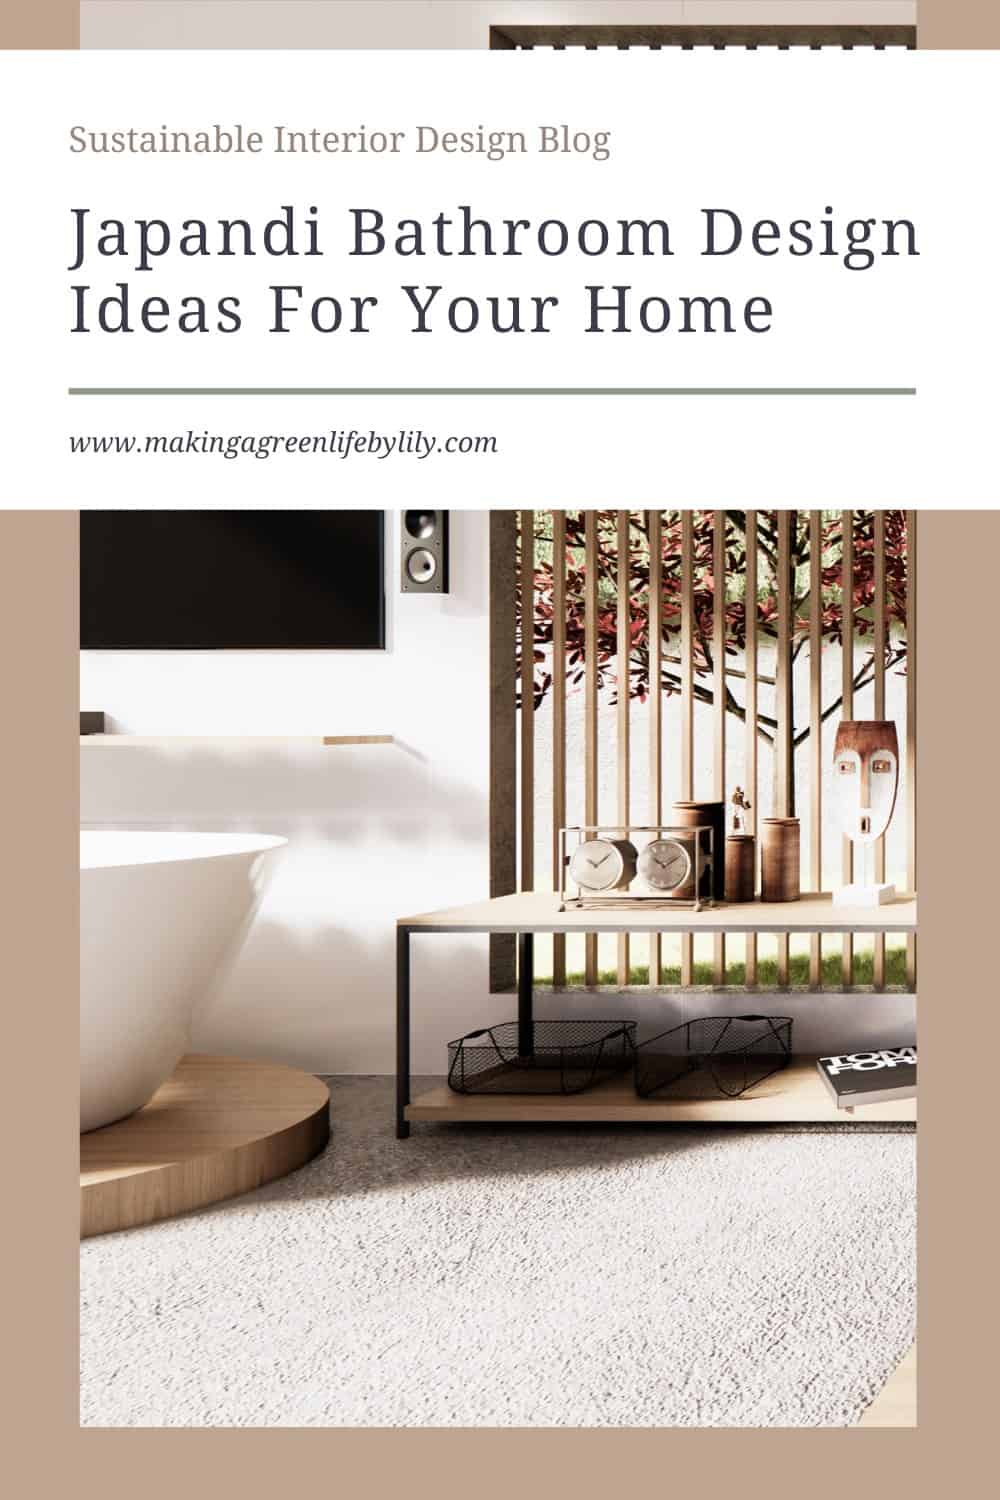 Japandi Bathroom Design Ideas for Your Home